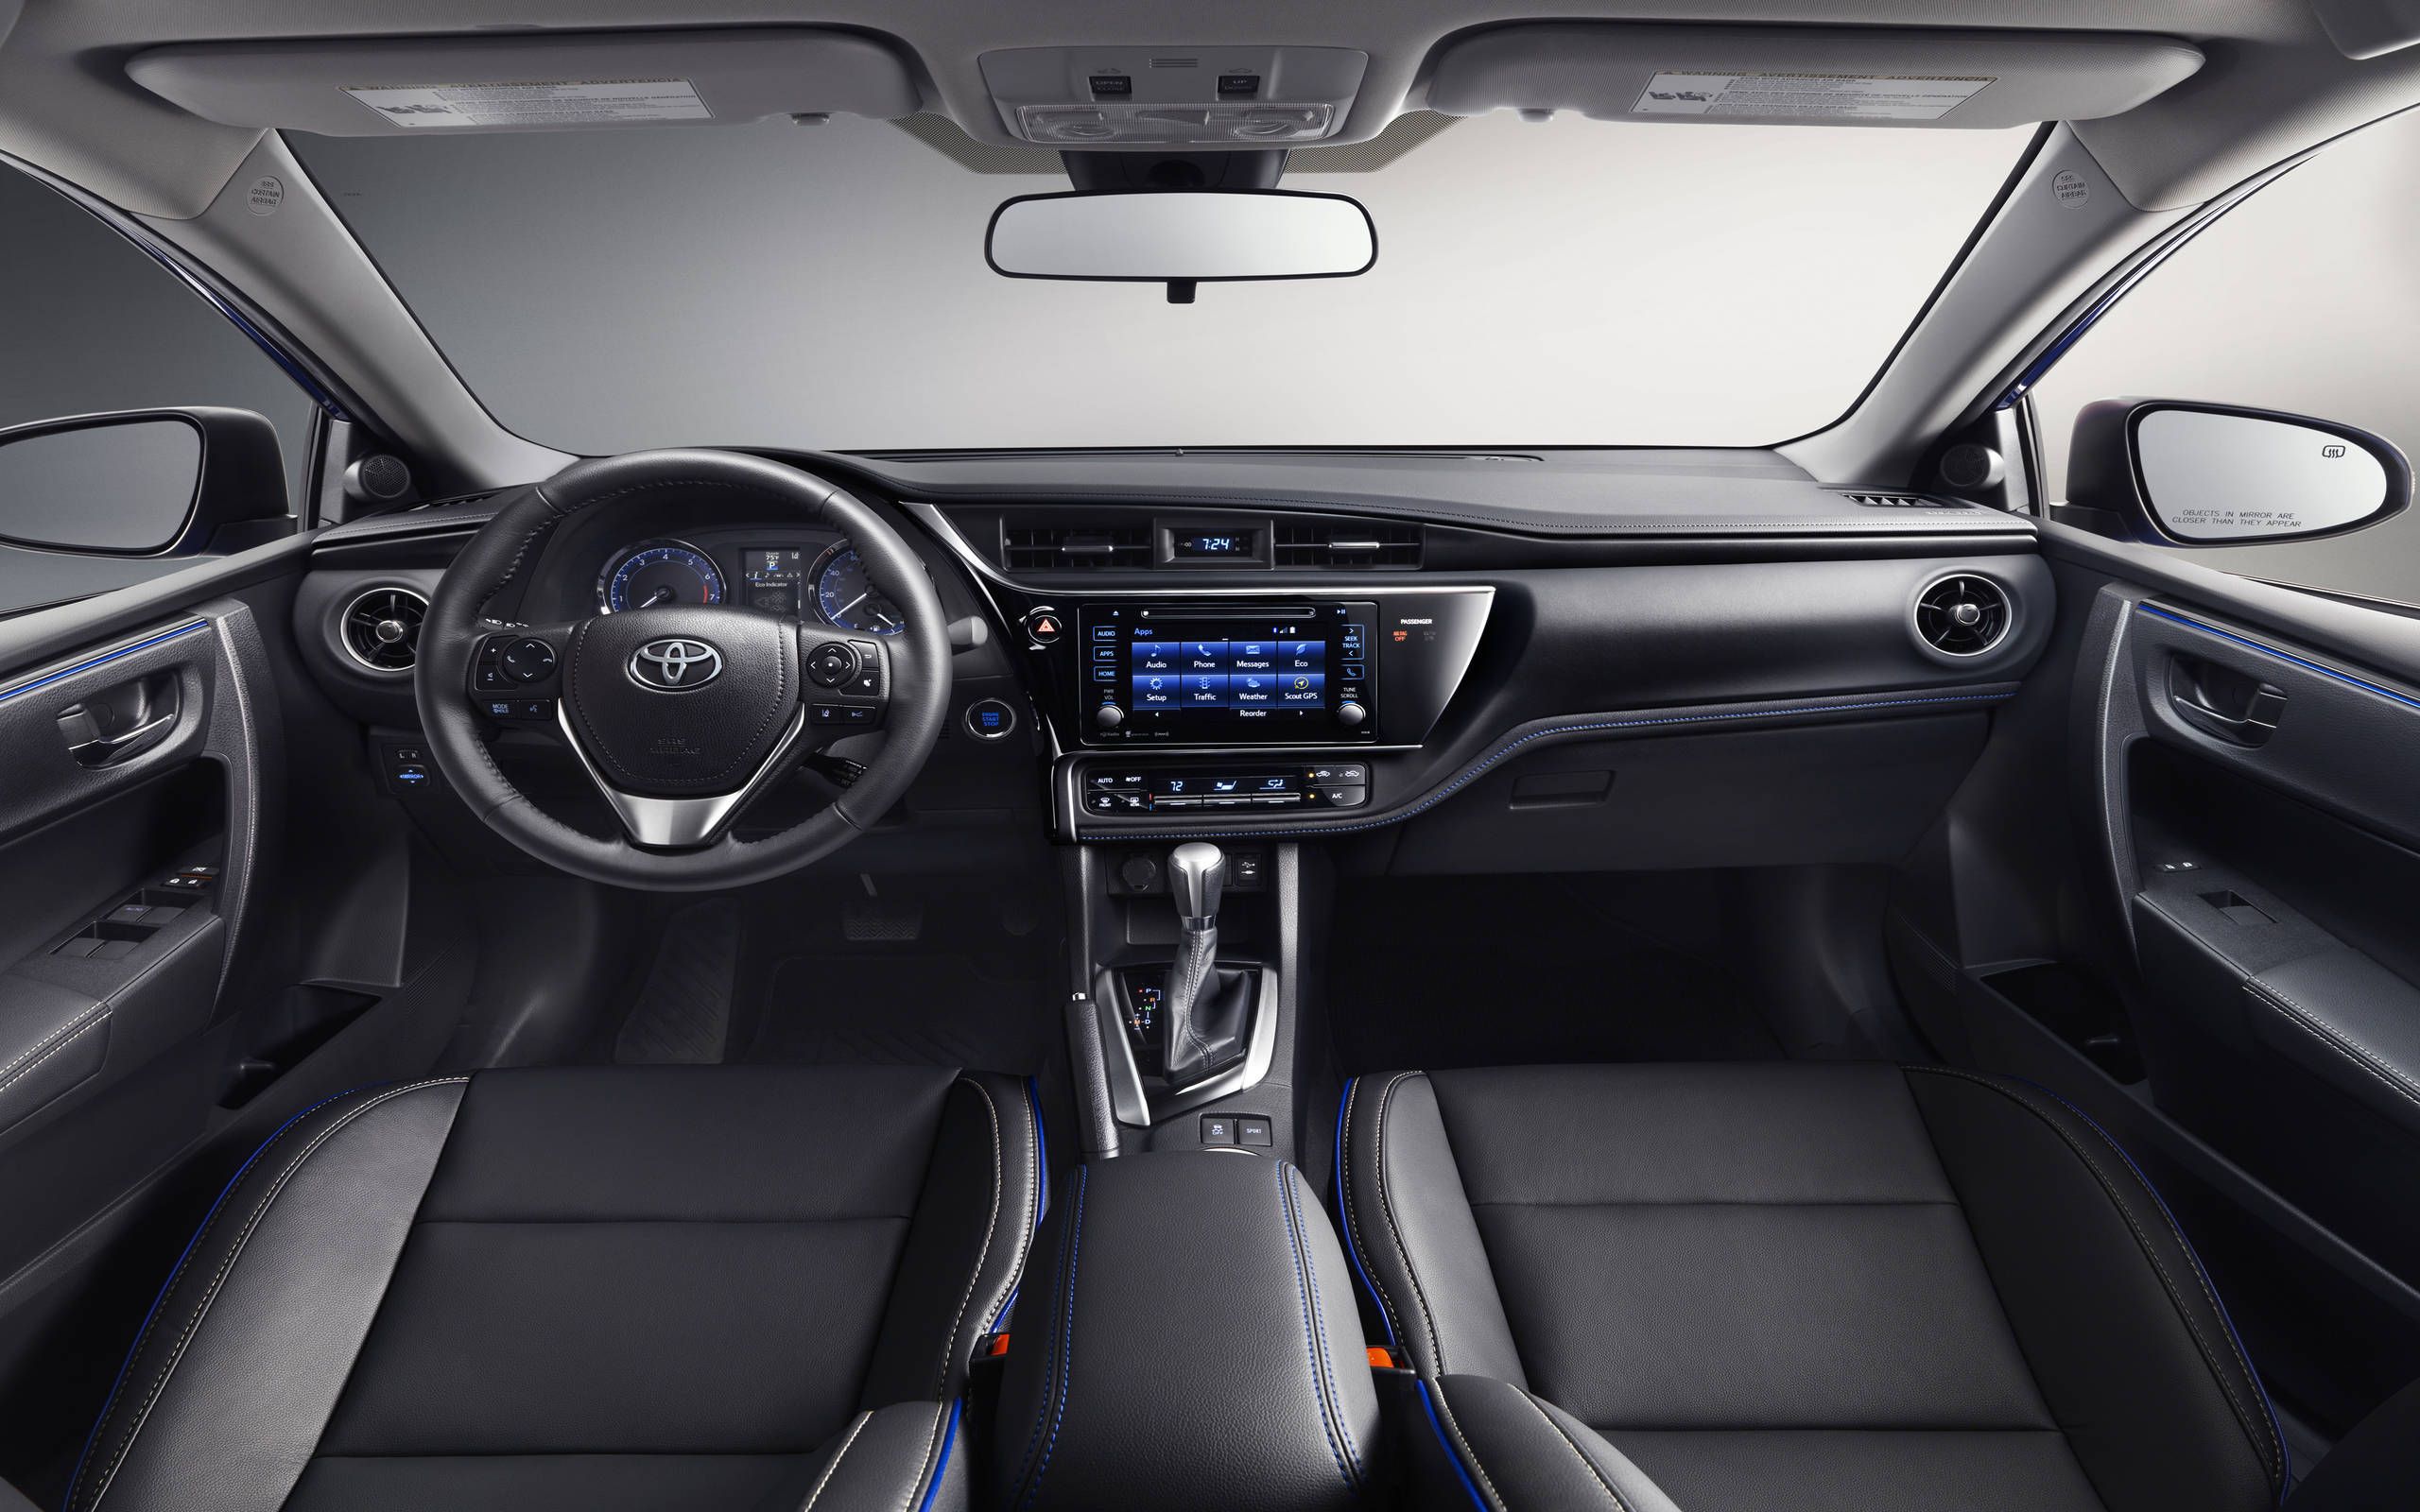 Gallery: 2017 Toyota Corolla XSE interior